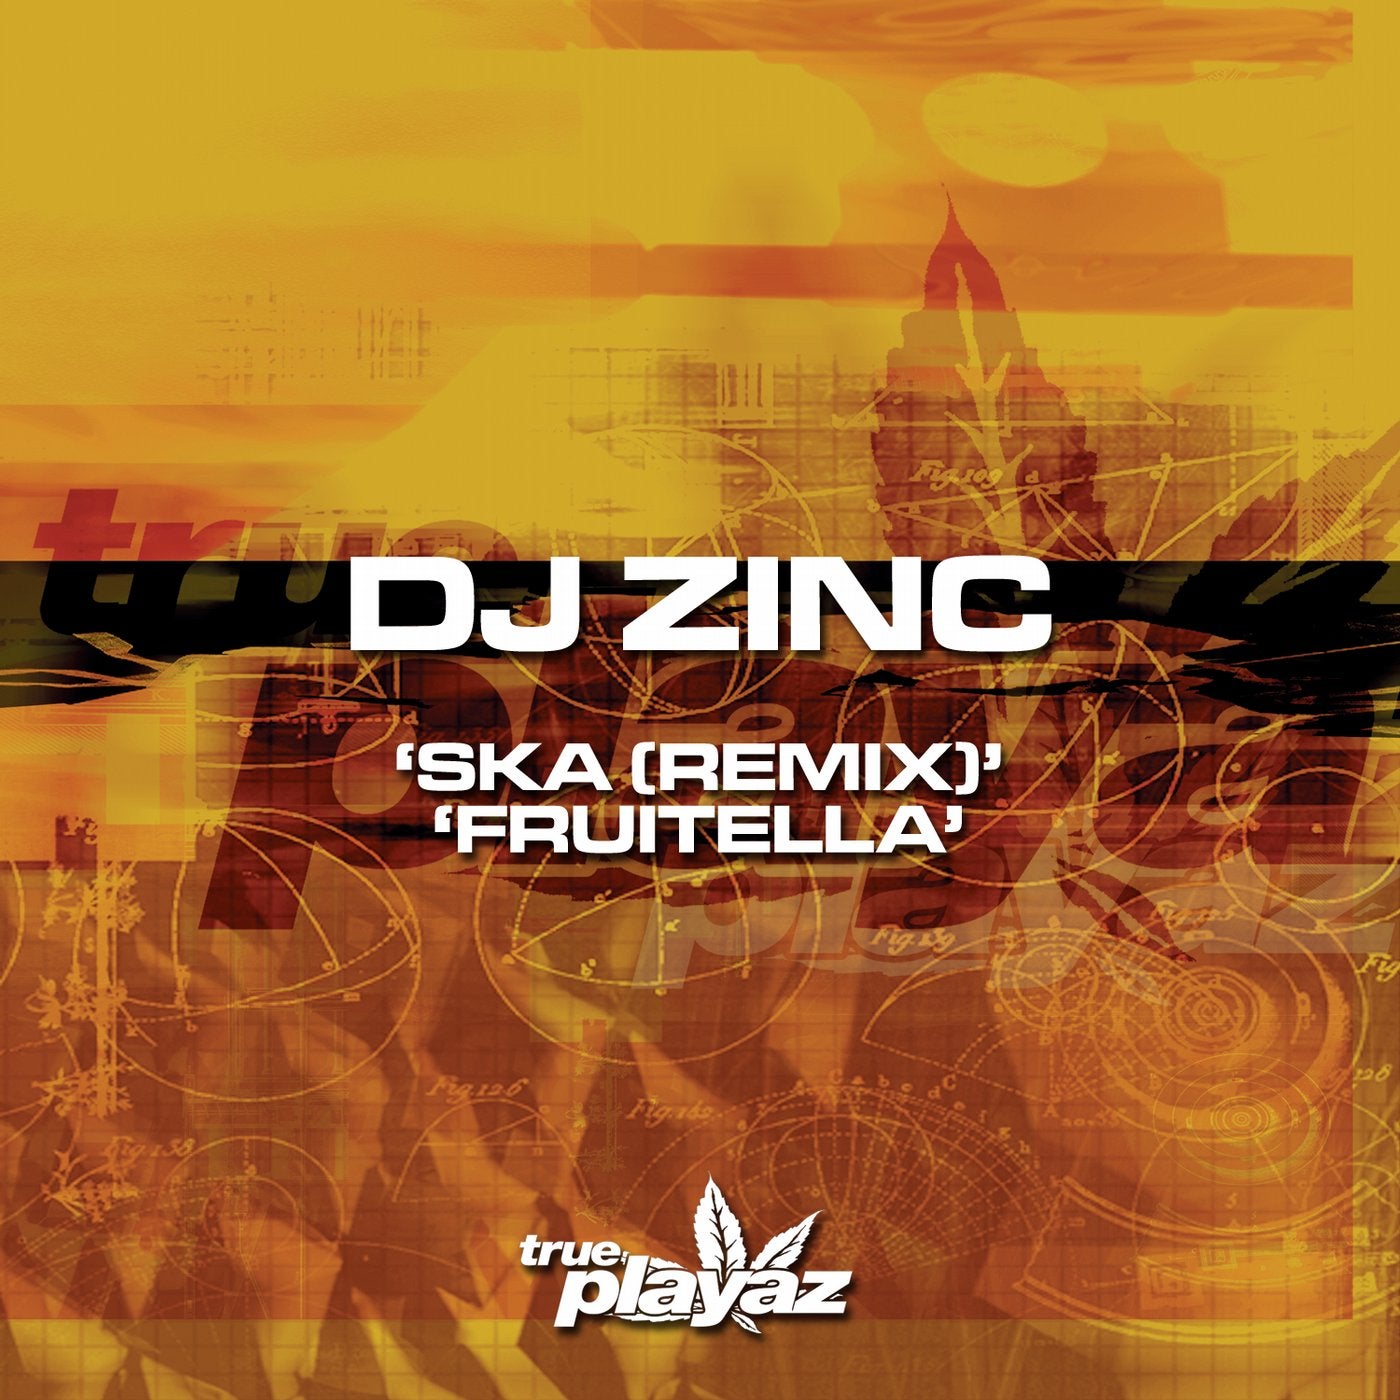 Ska (Remix) / Fruitella